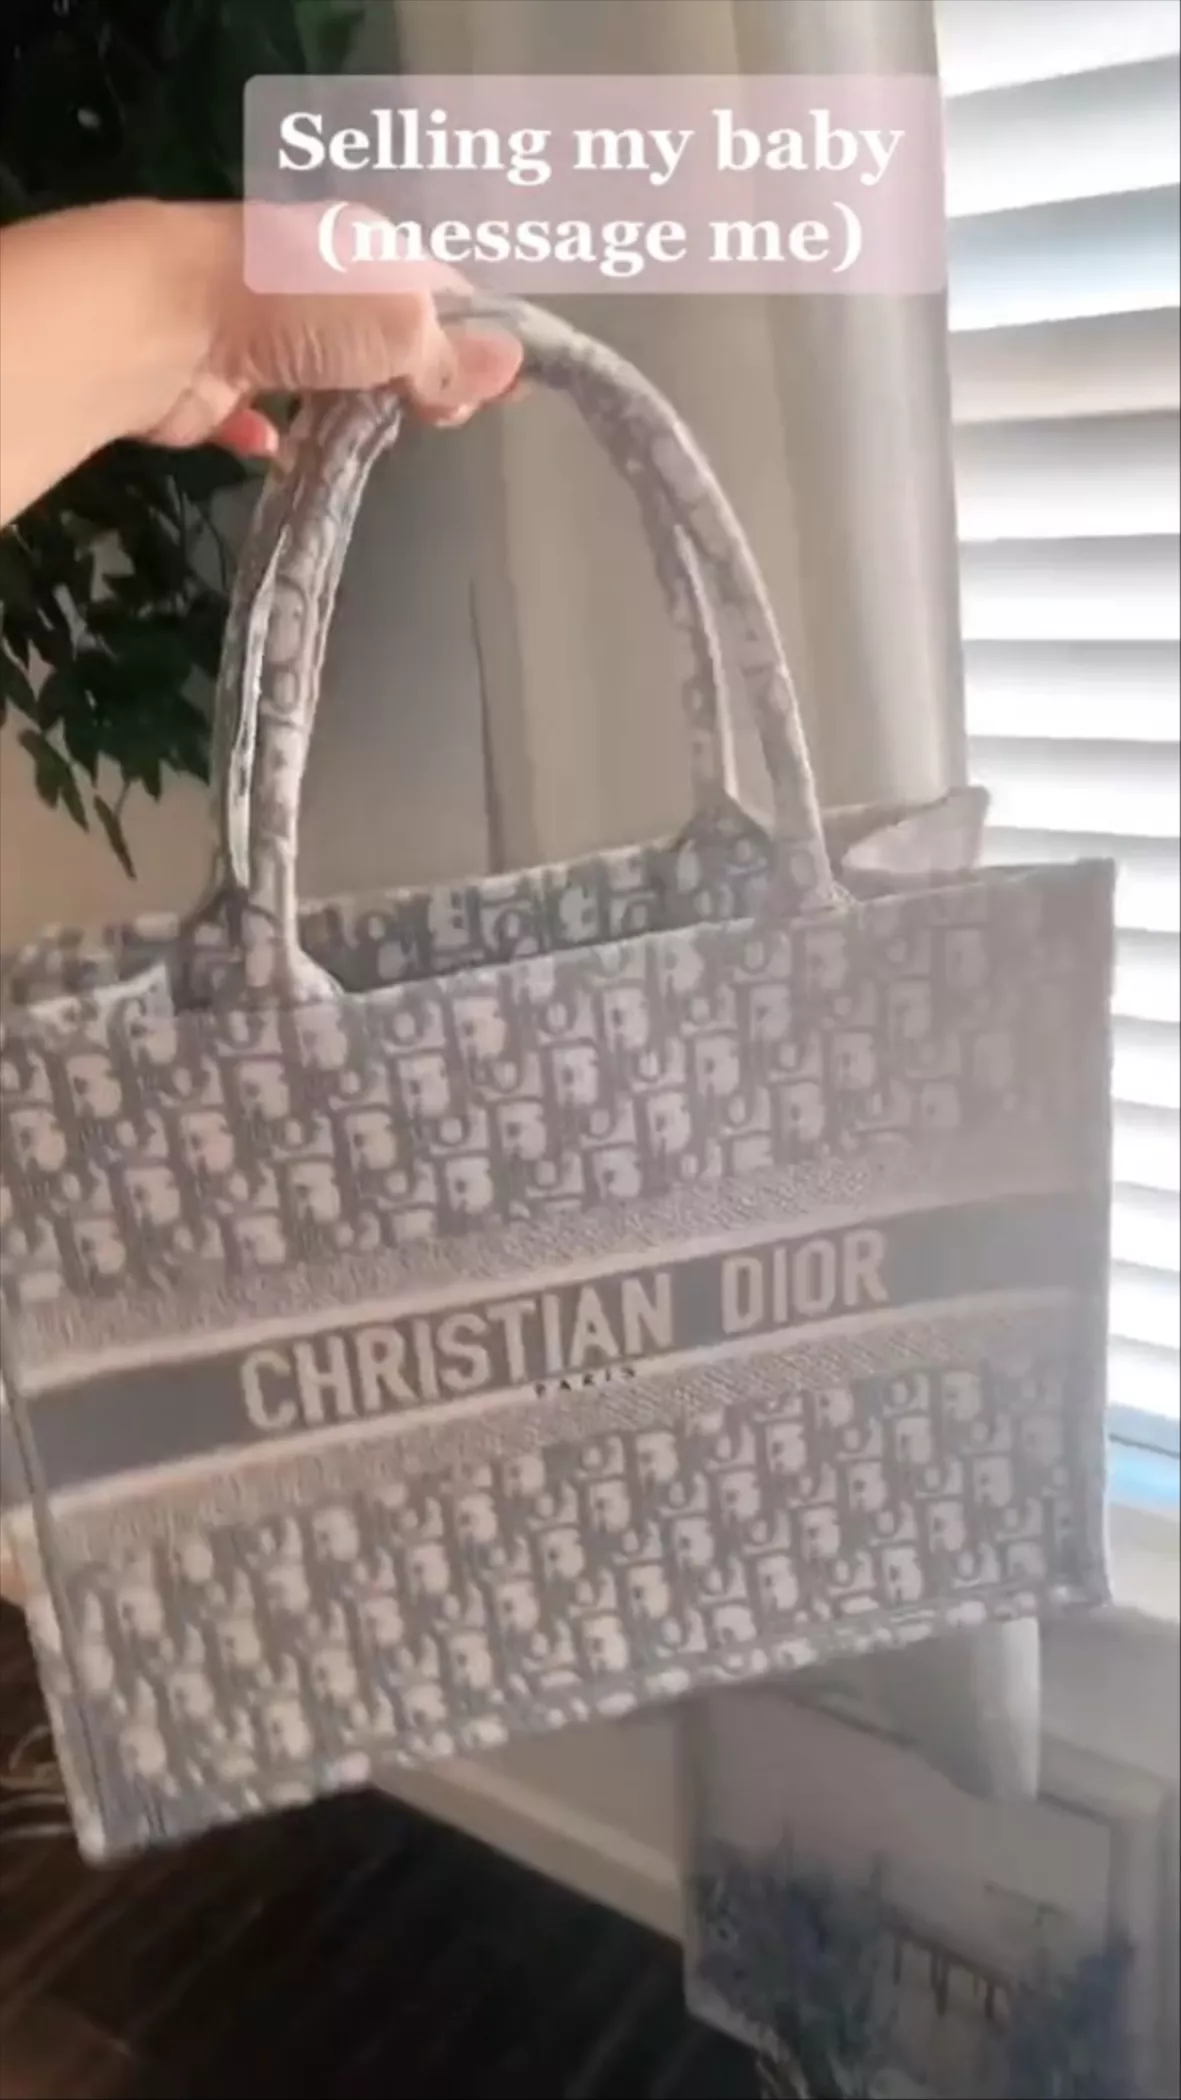 W2C Woman's Christian Dior bag : r/DHgate